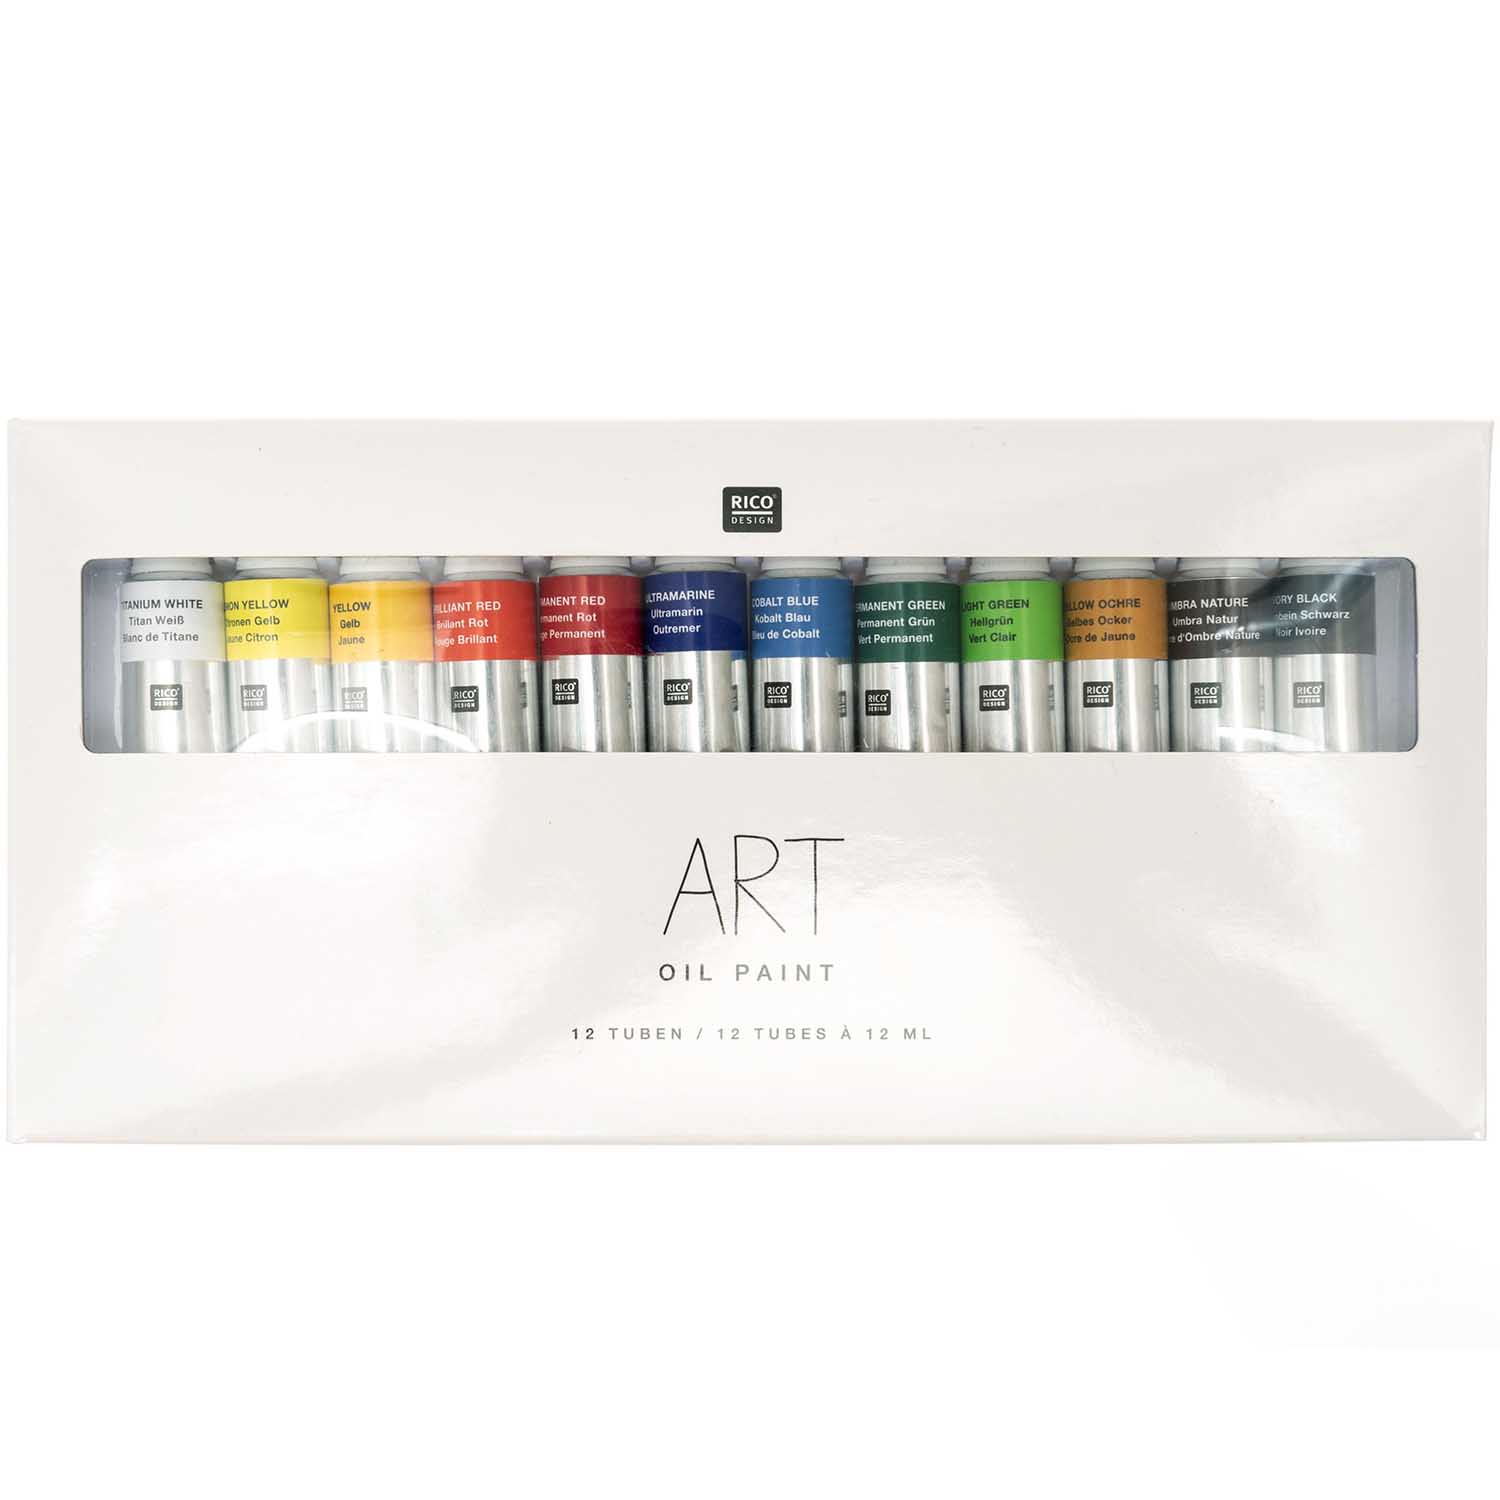 ART Ölfarben Set 12 Farbtuben á 12ml